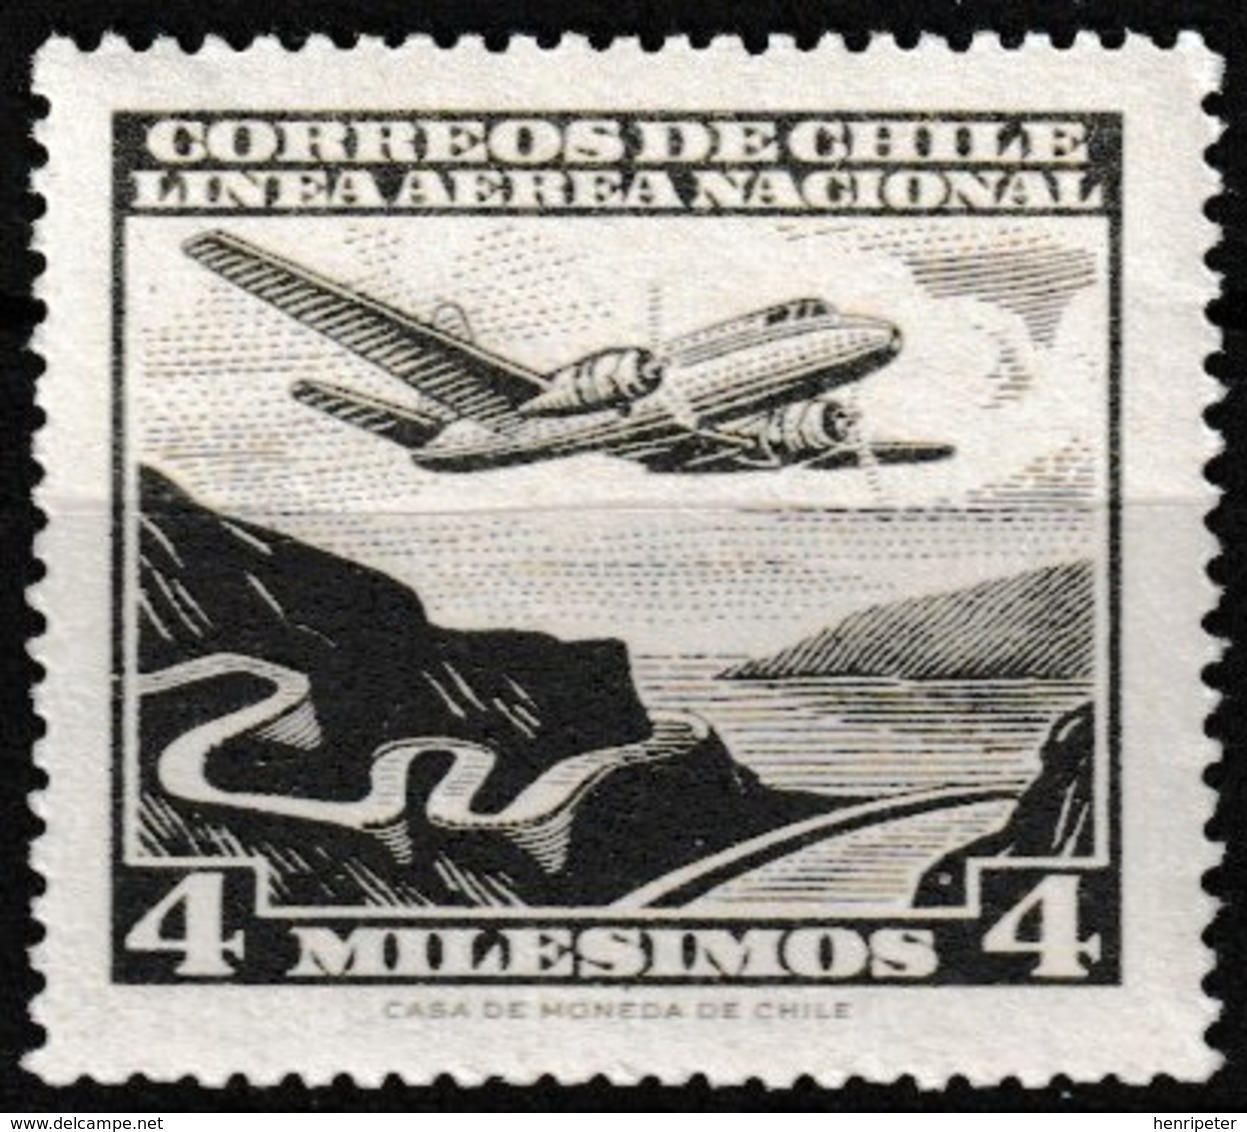 Timbre Aérien Gommé Neuf** - Avion Survolant Une Montagne Airplane Over Mountain - N° 194 (Yvert) - Chili 1960 - Chili